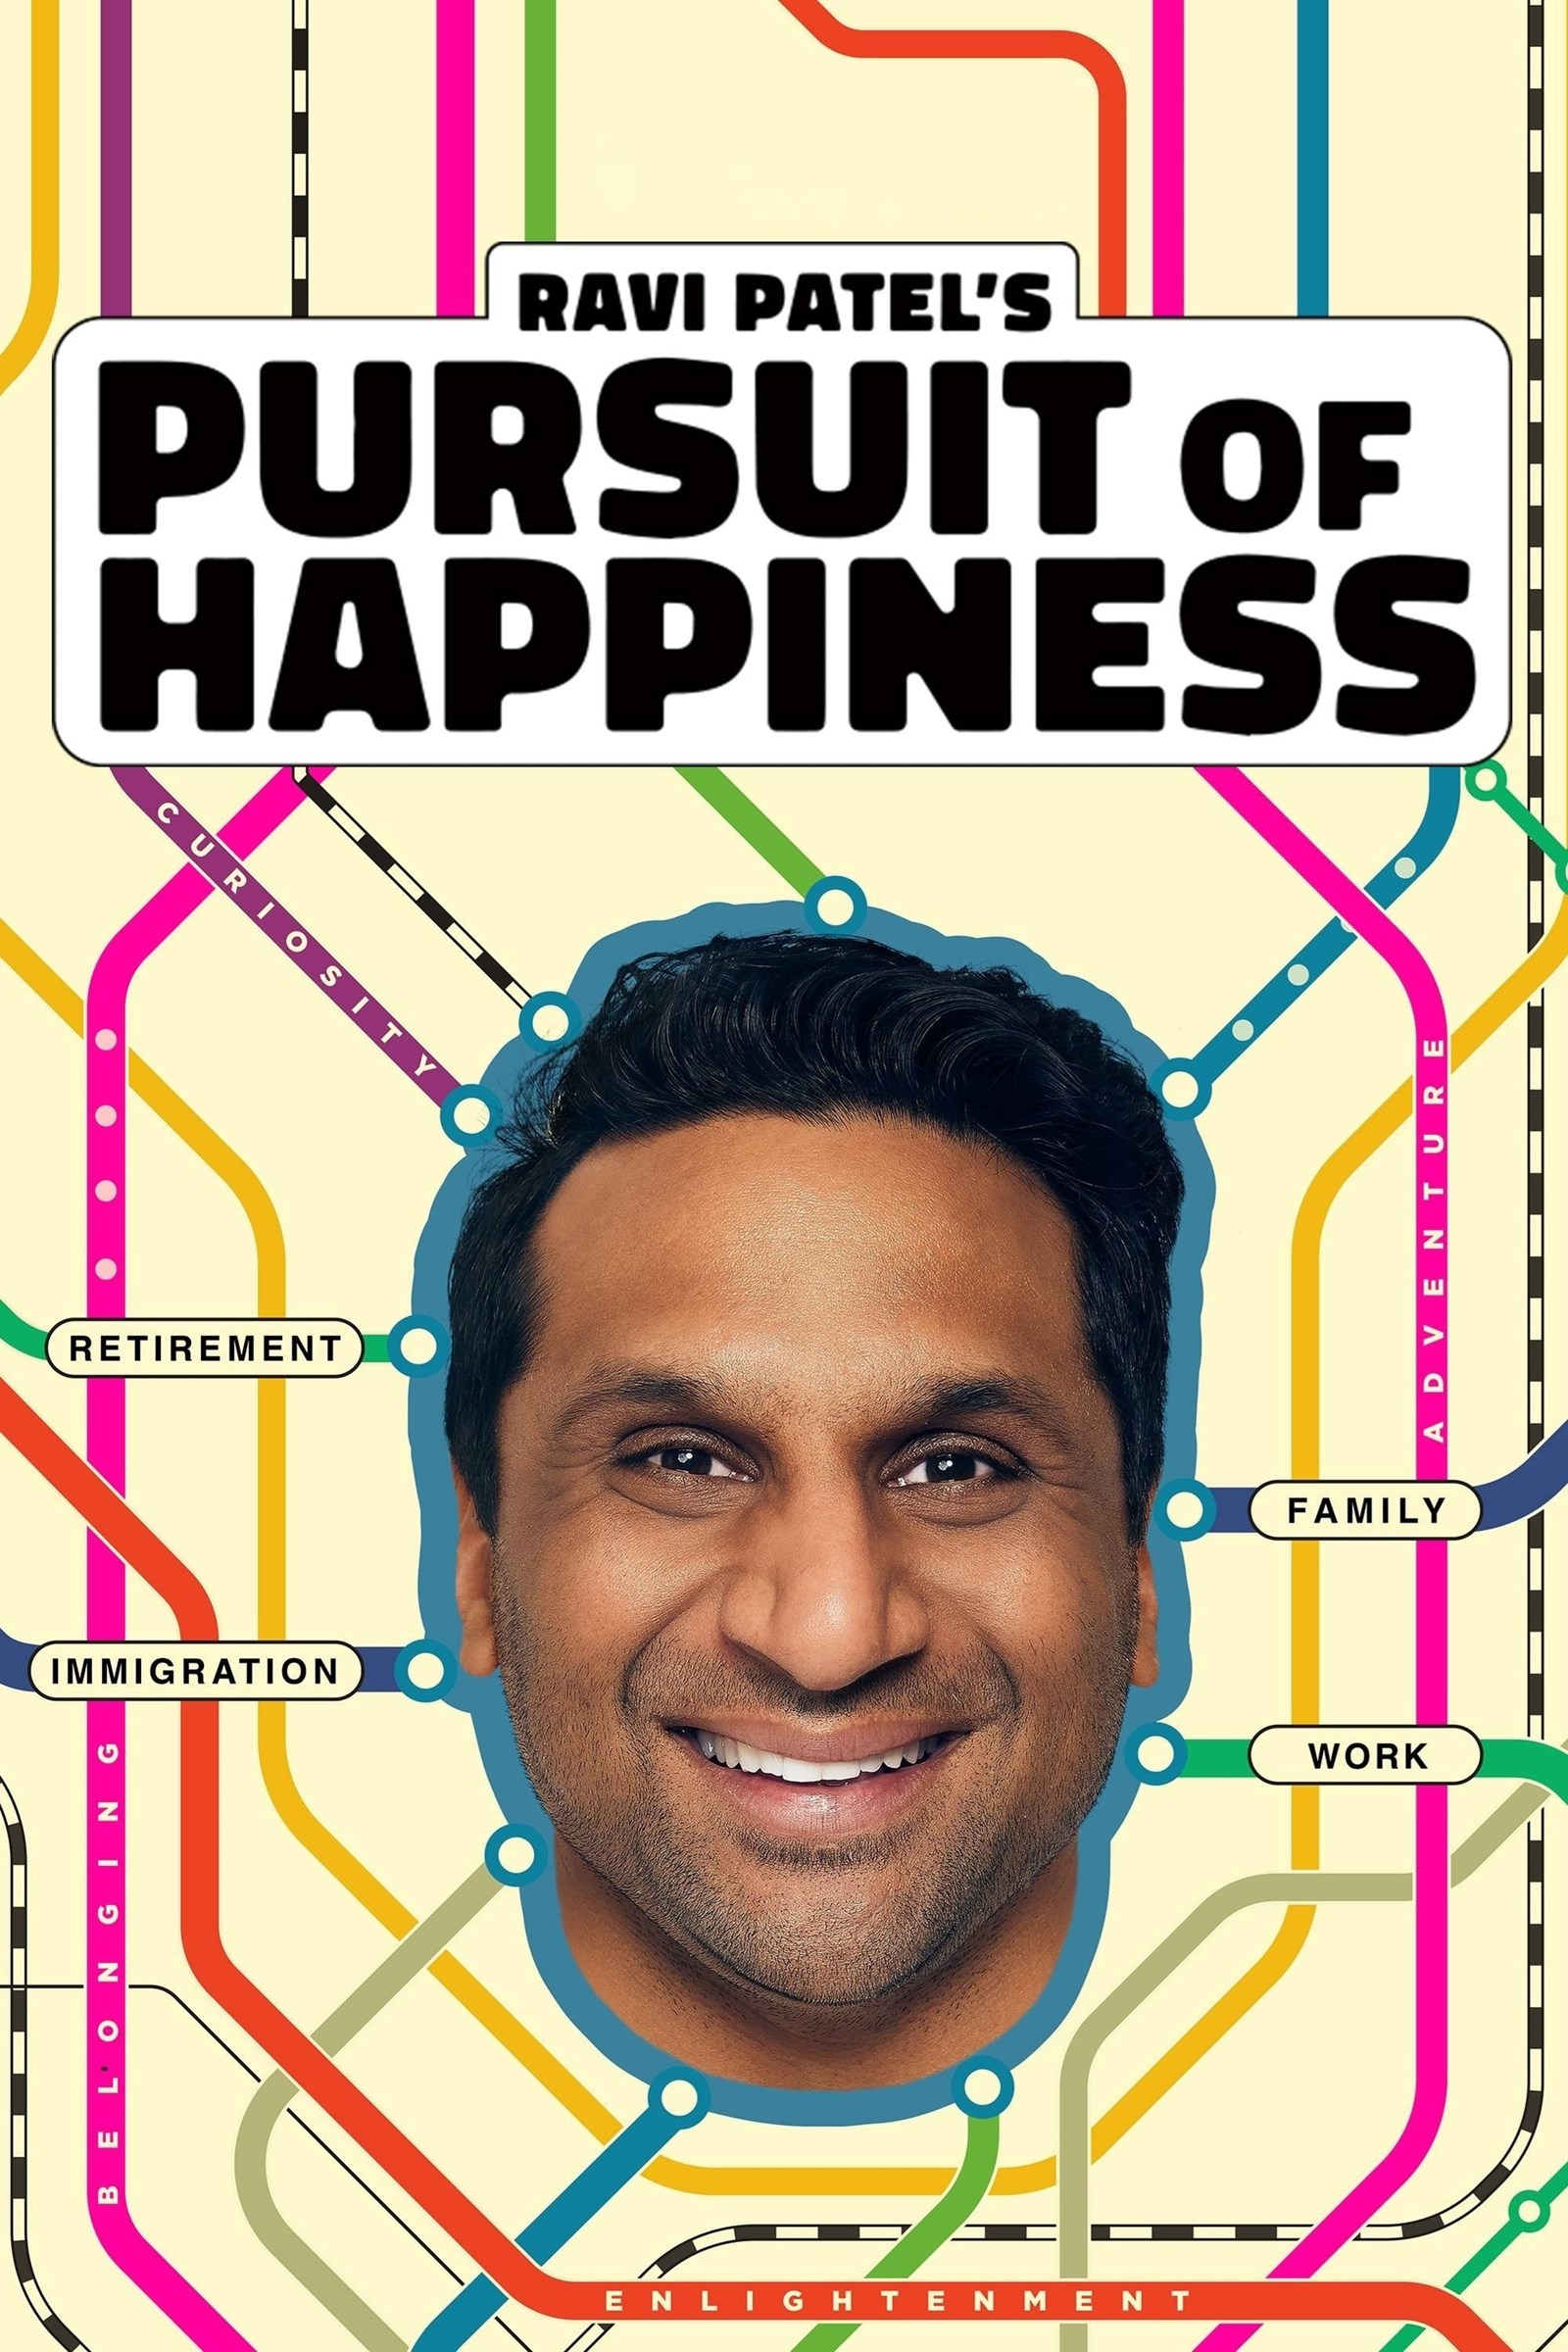 Ravi patel pursuit of happiness